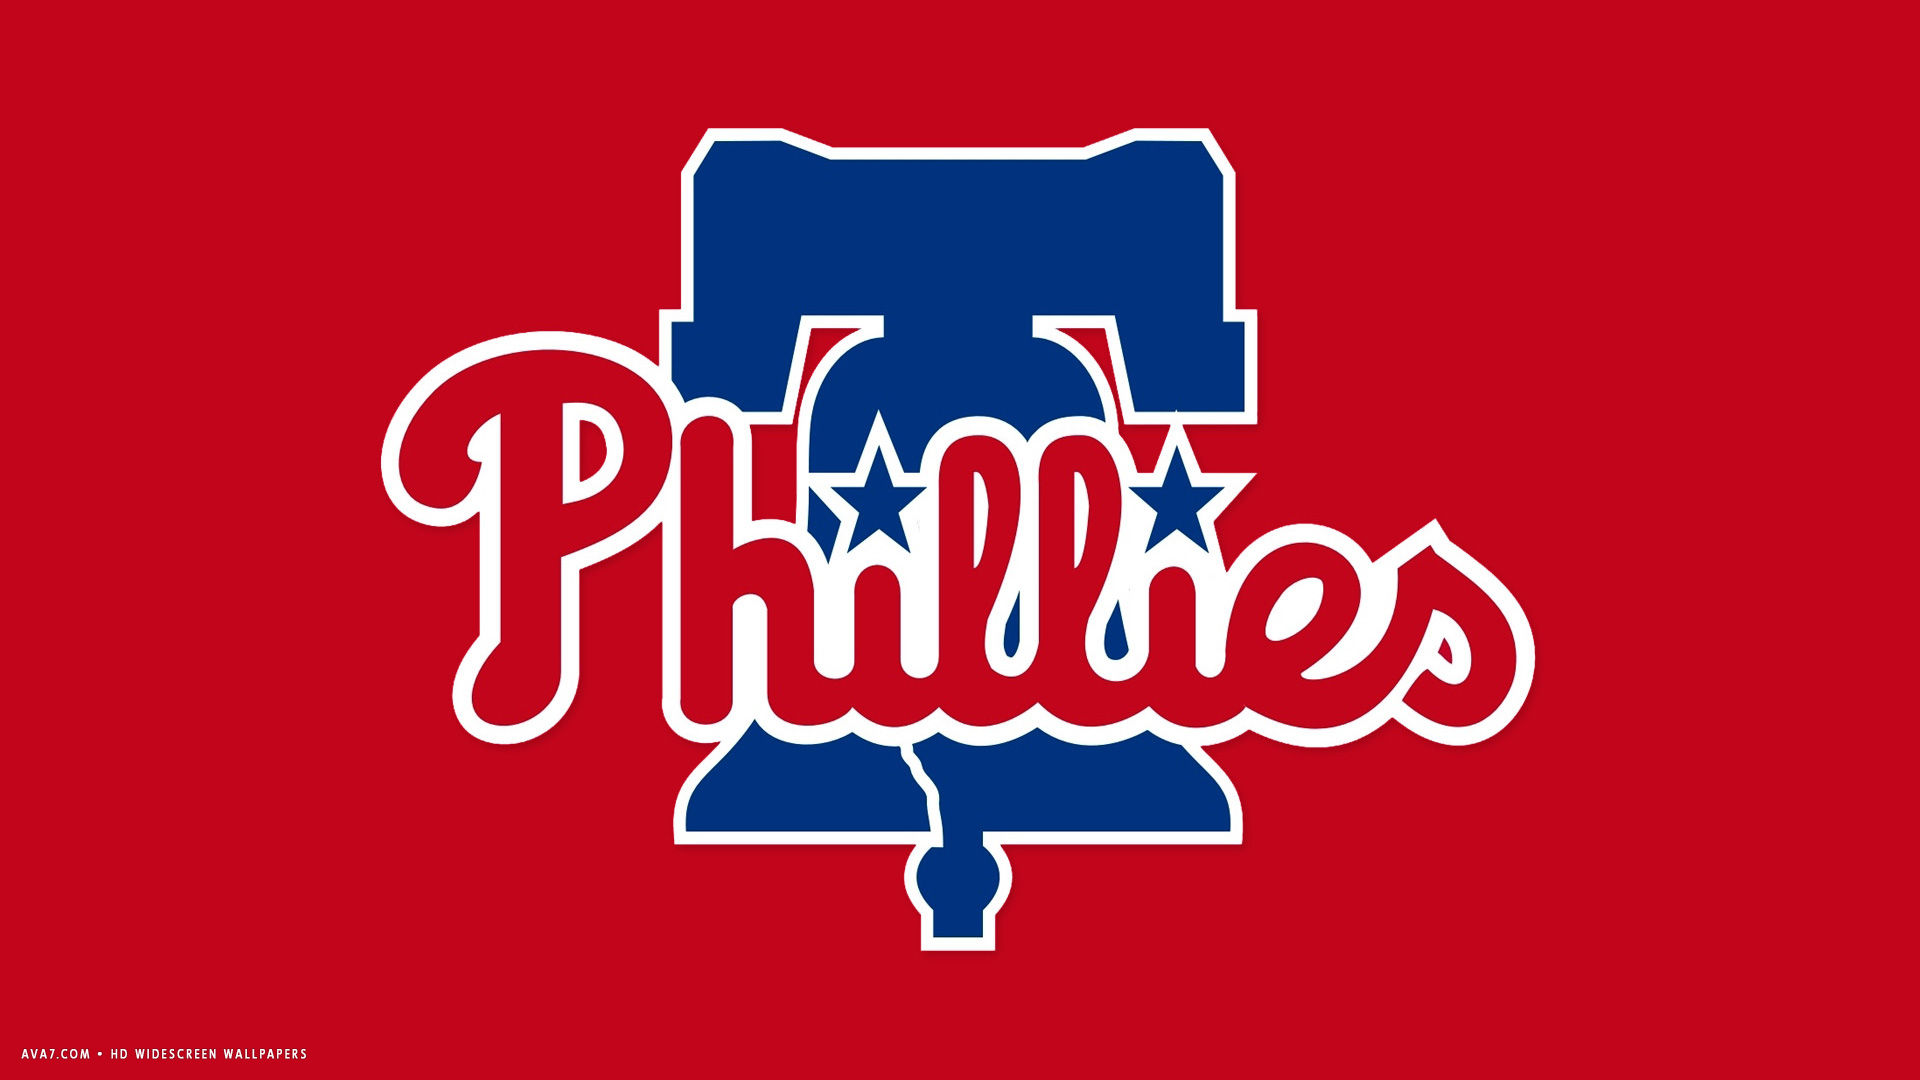 Philadelphia Phillies Mlb Baseball Team Hd Widescreen - Desktop Wallpaper Philadelphia Phillies - HD Wallpaper 